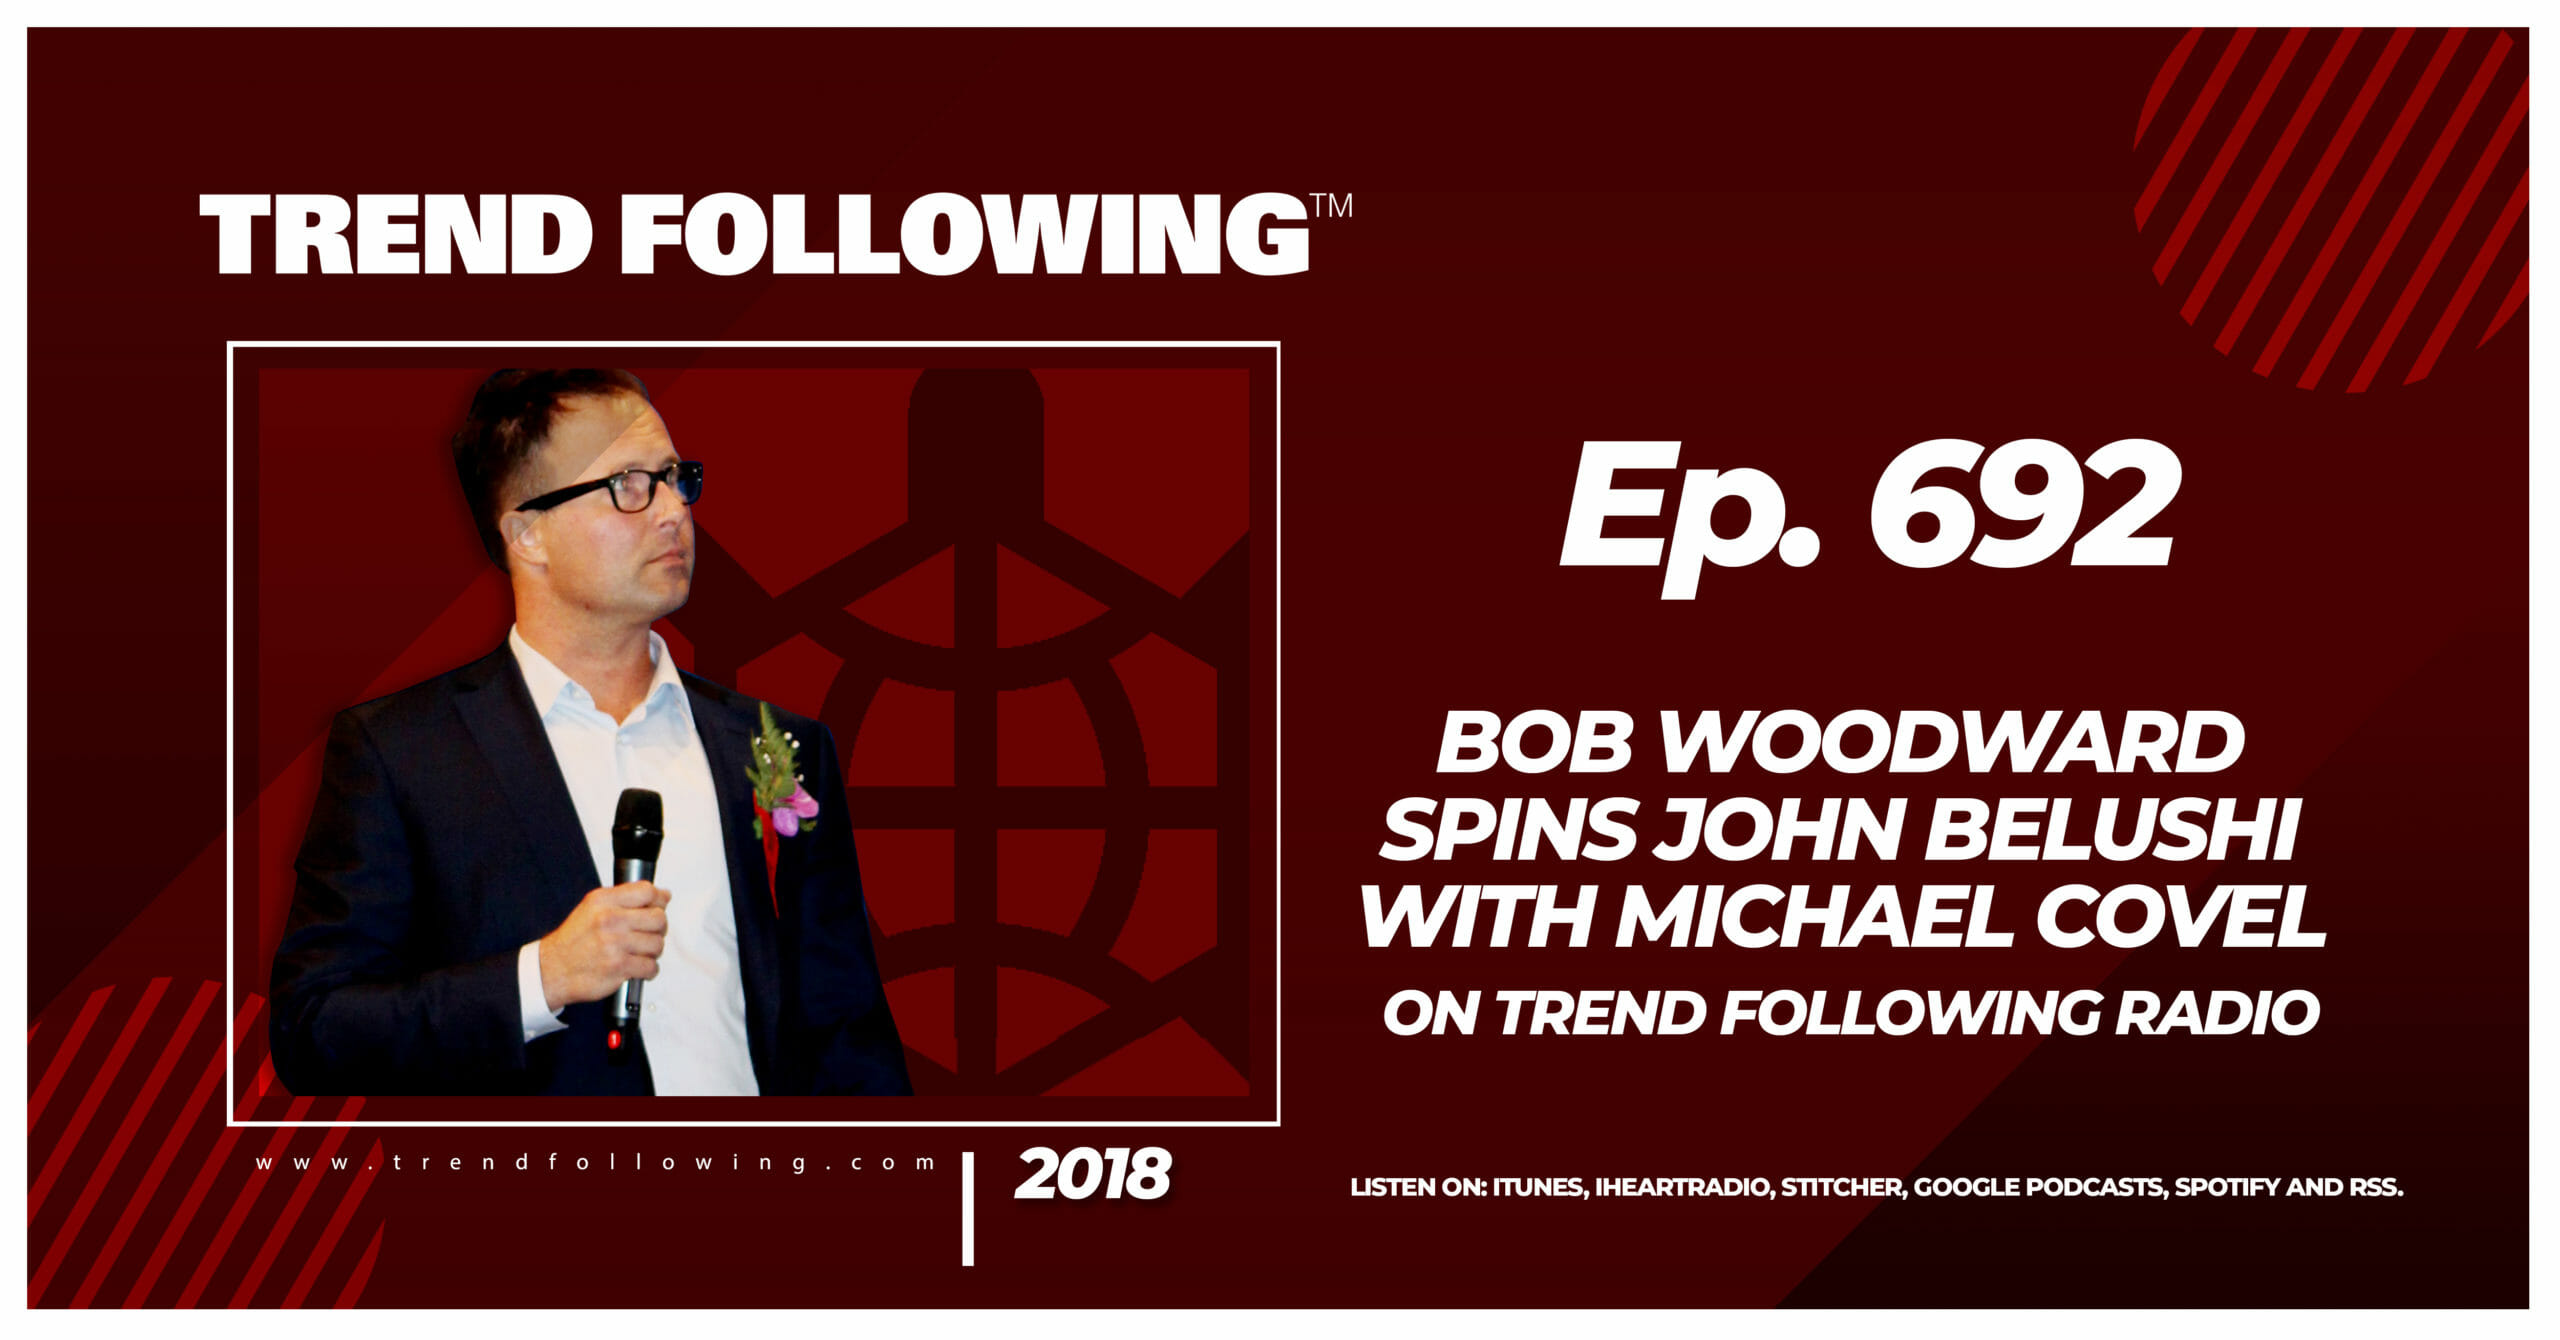 Bob Woodward Spins John Belushi with Michael Covel on Trend Following Radio